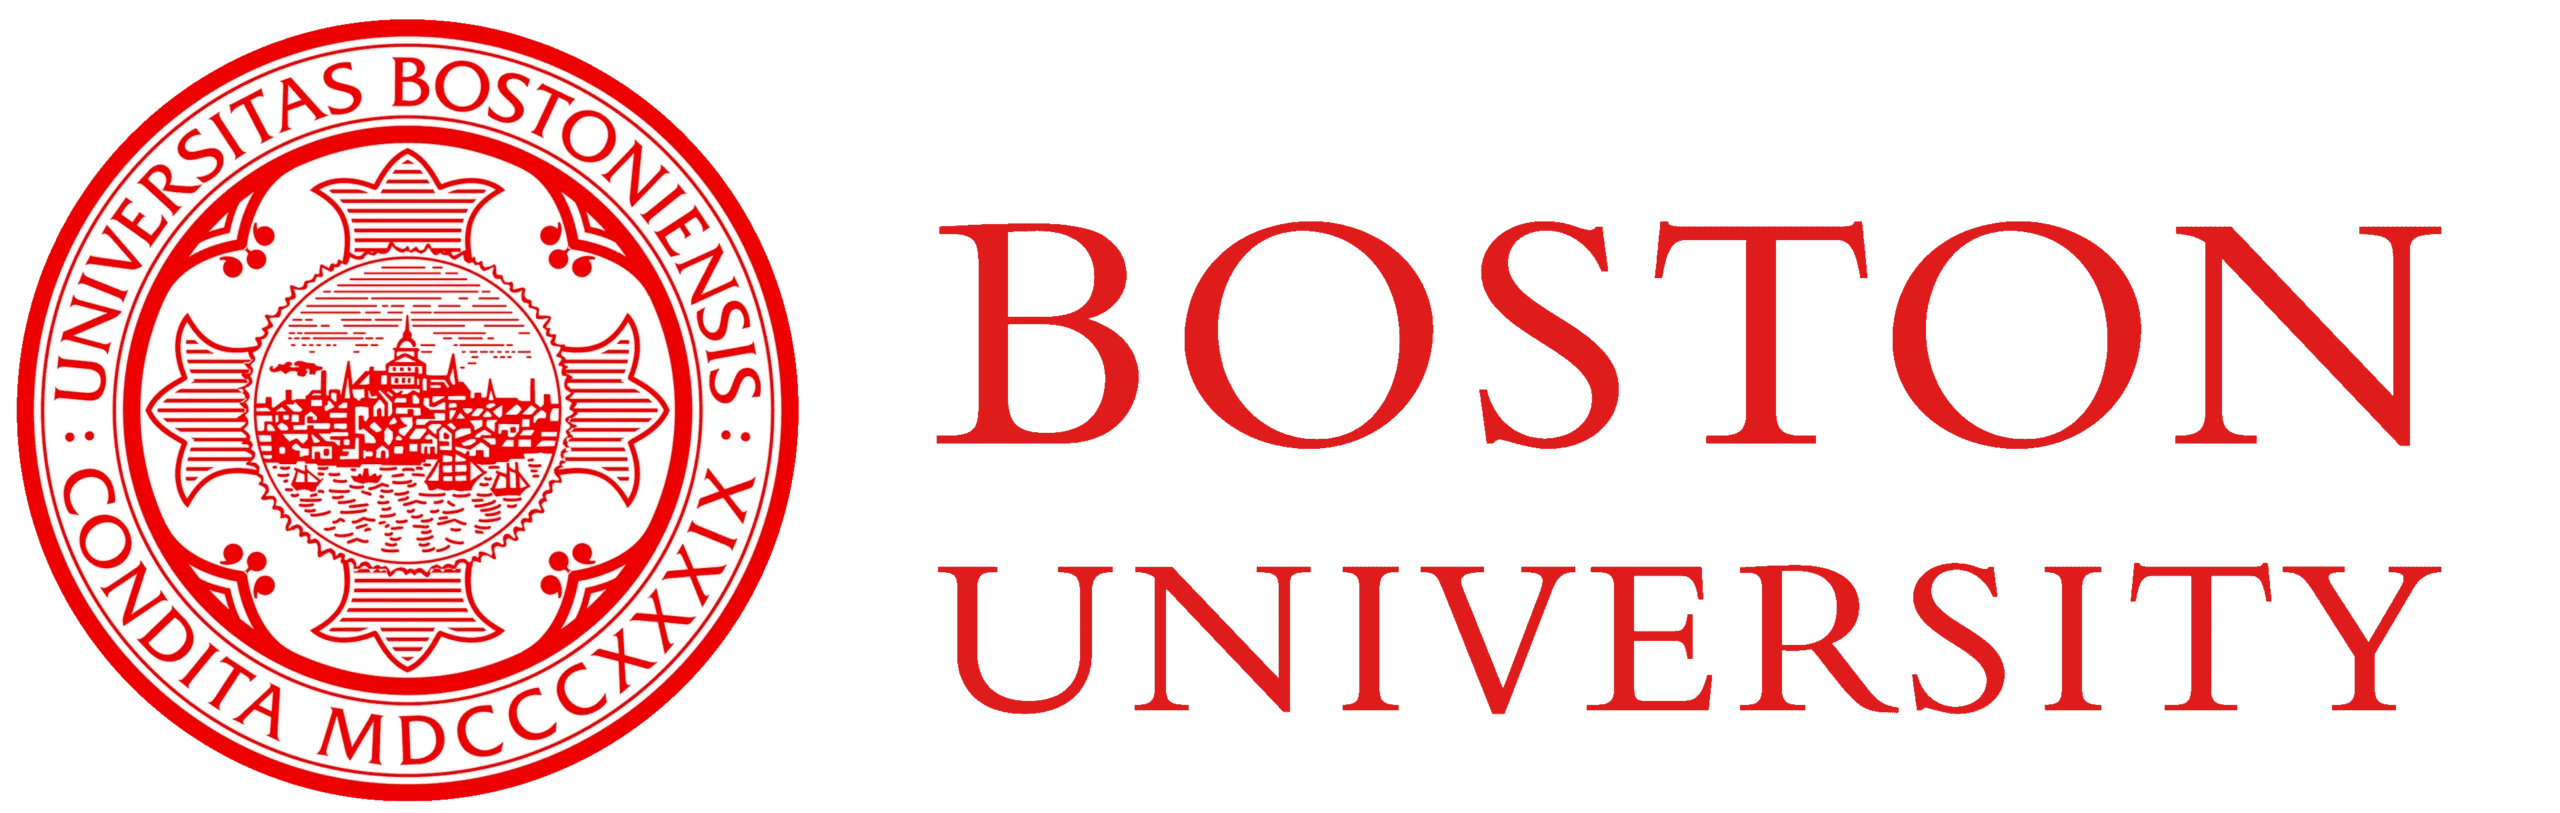 Boston-University-Emblem1